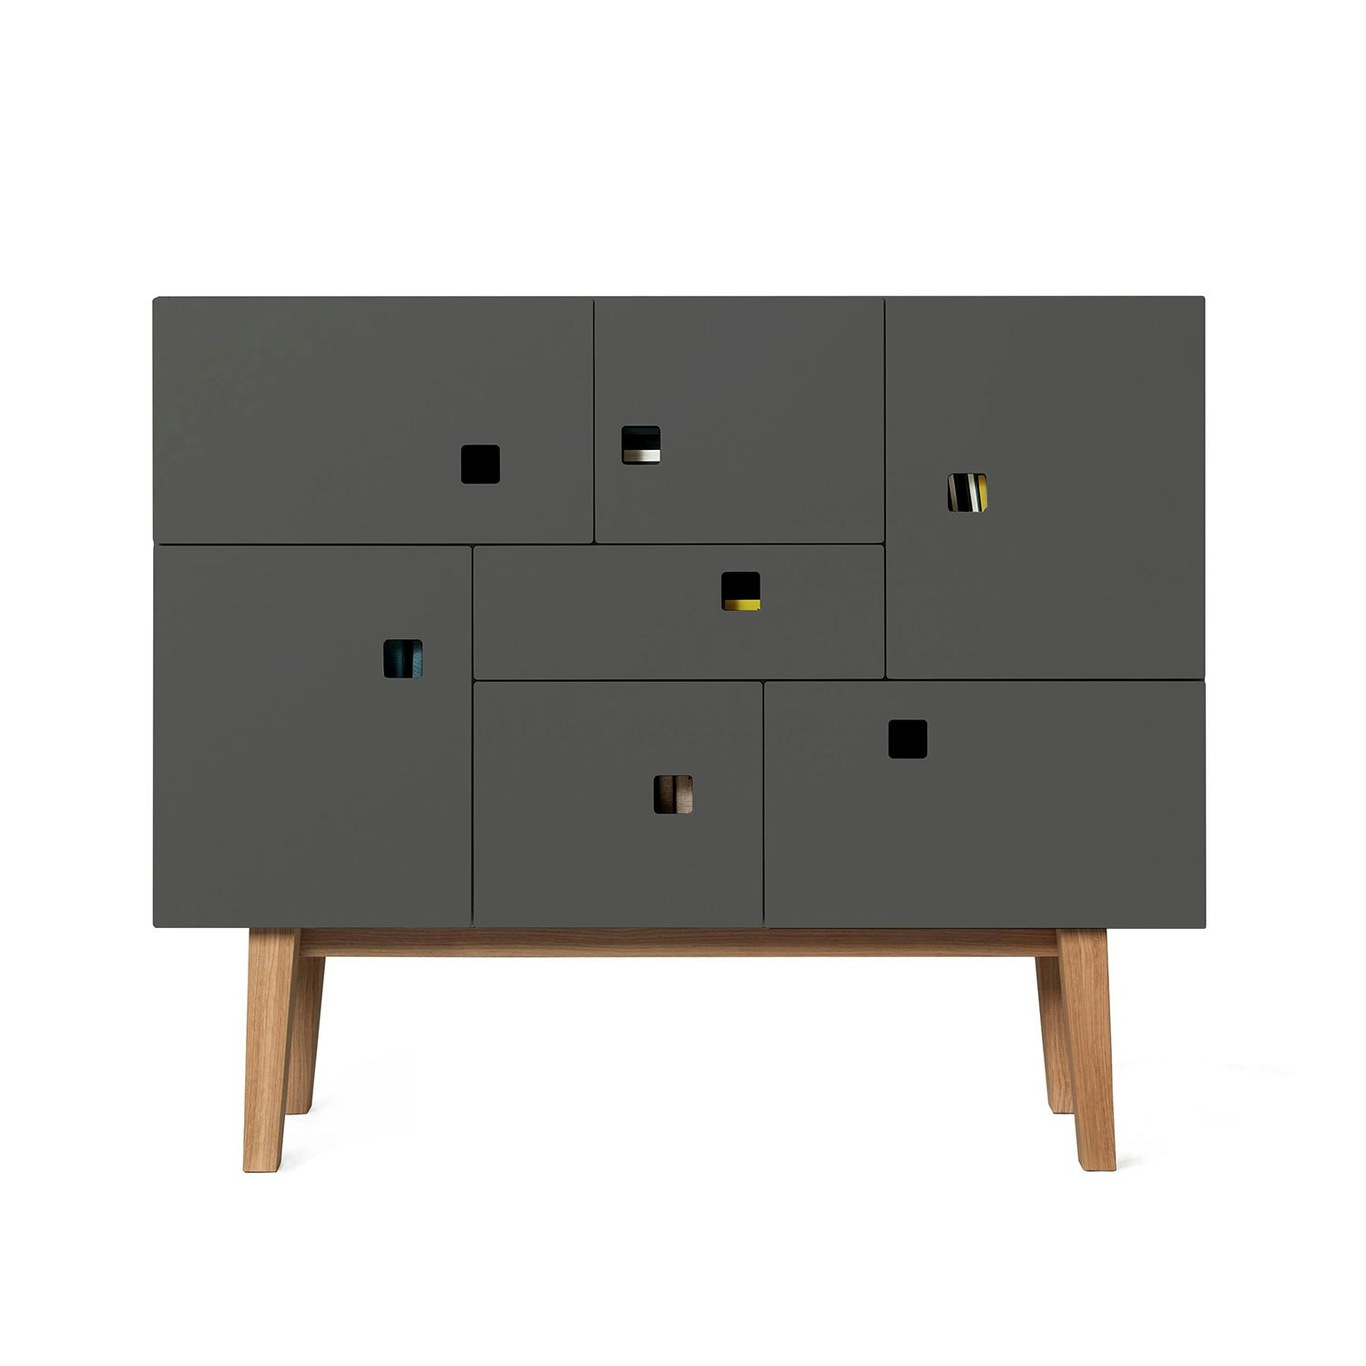 Peep C1 Multi-Purpose Cabinet, Slate Grey/Ek Retro